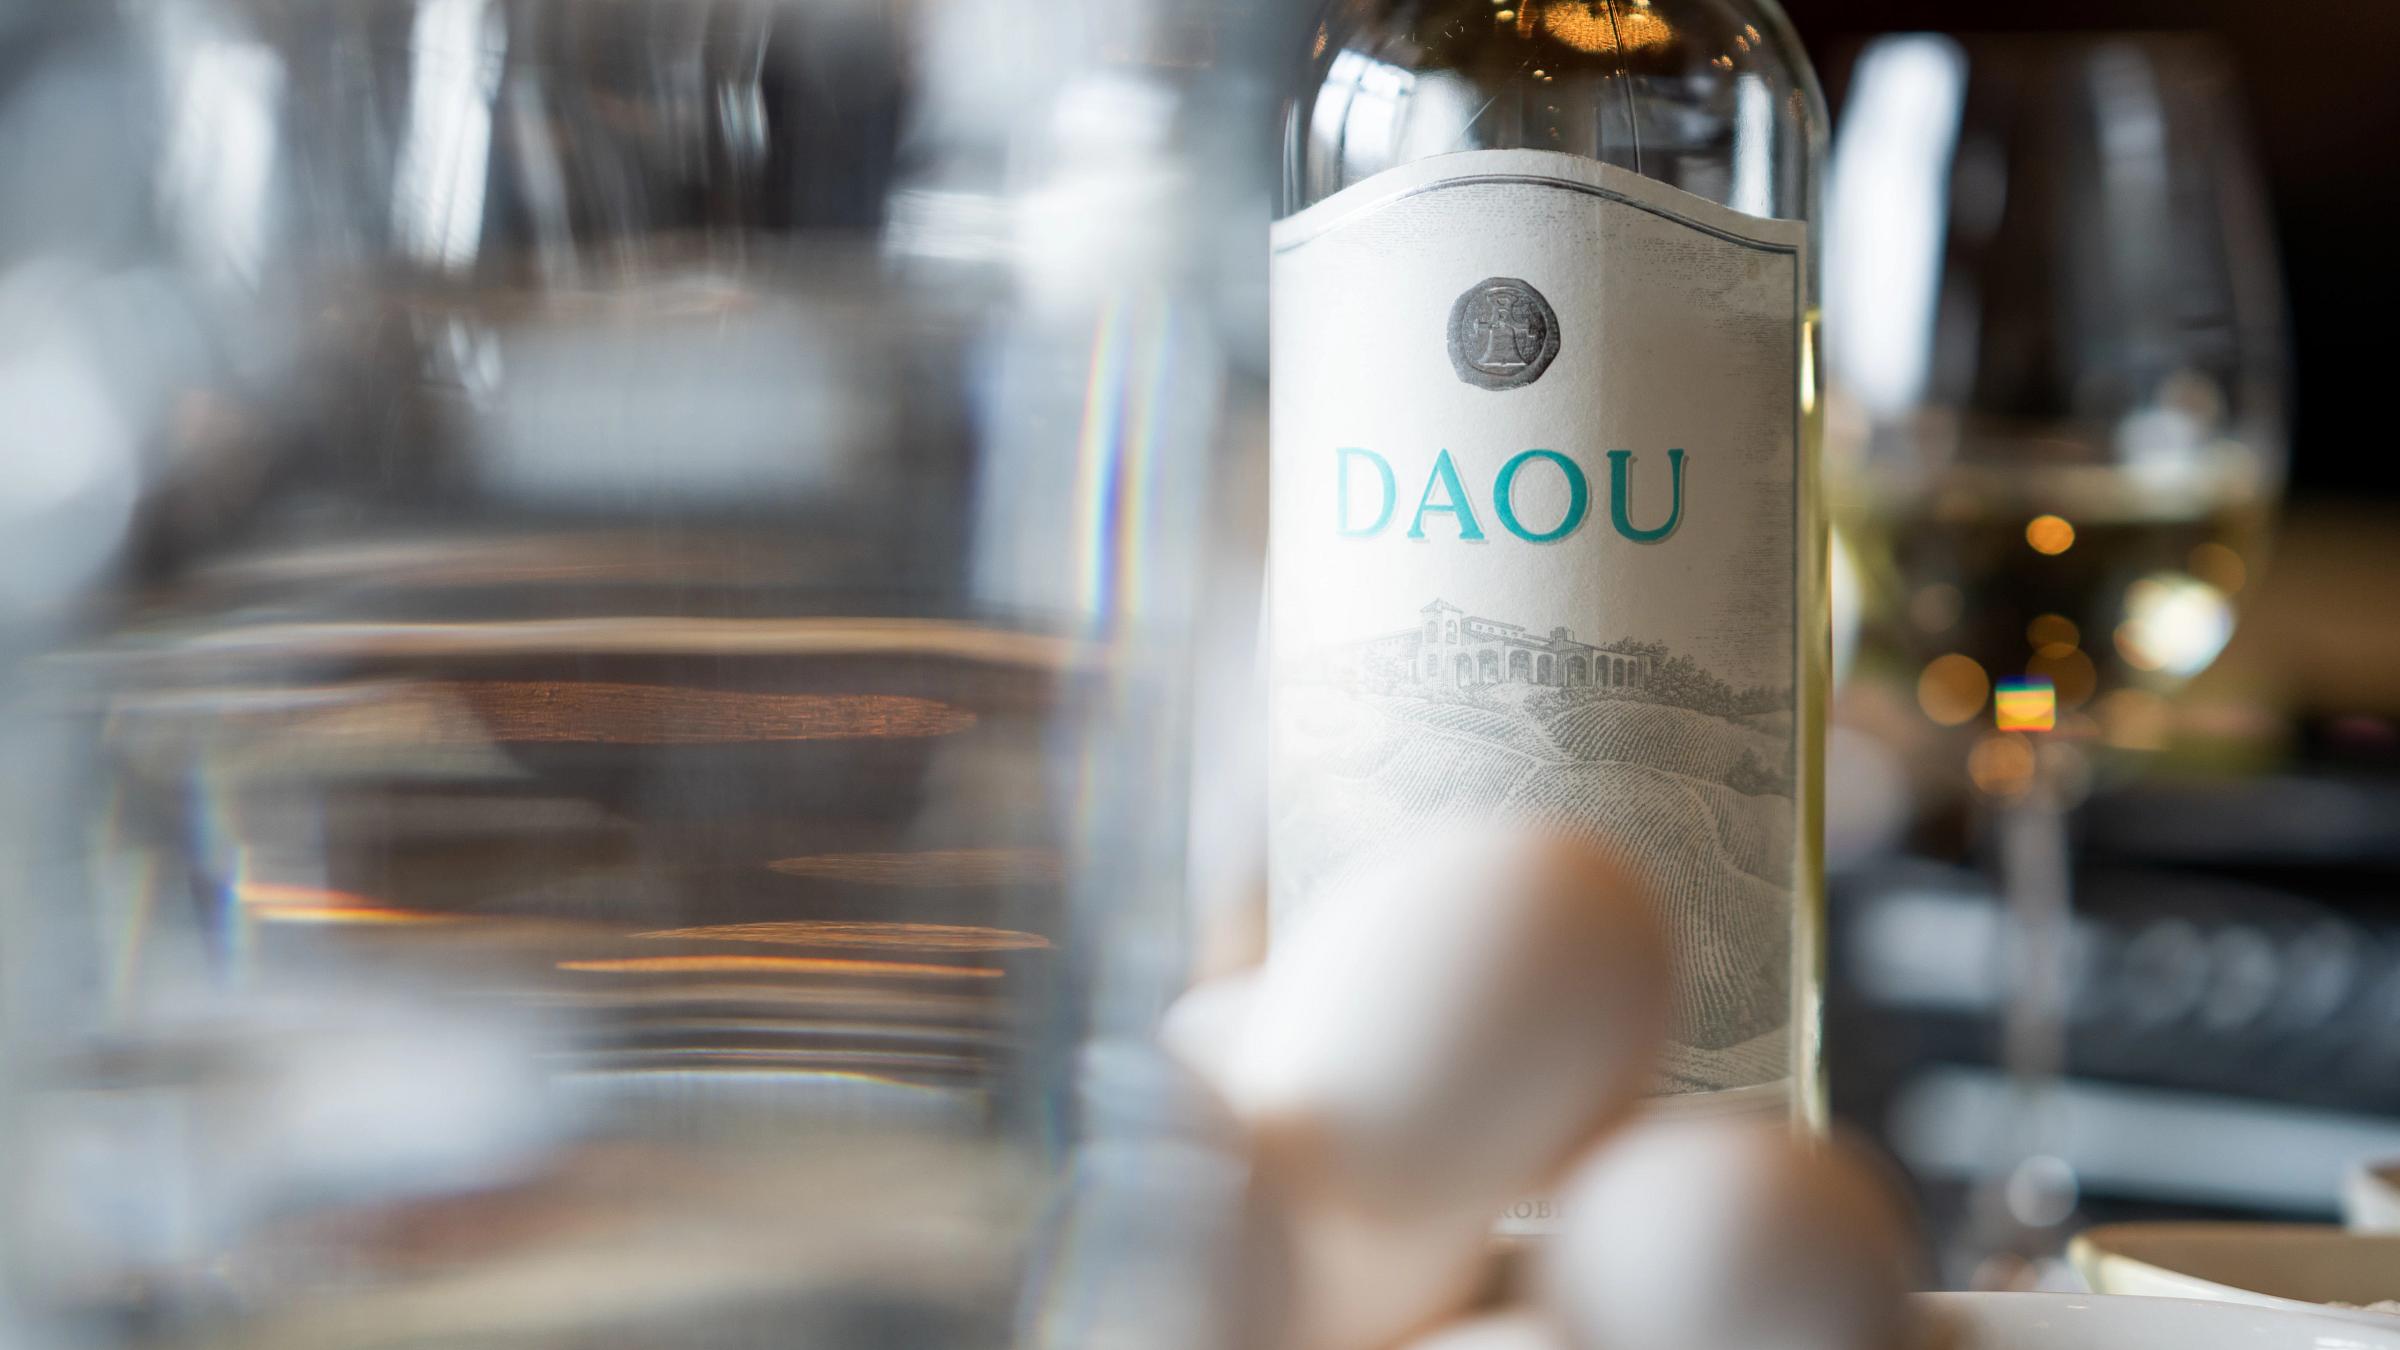 Daou wine at Deer Valley's Taste of Luxury event